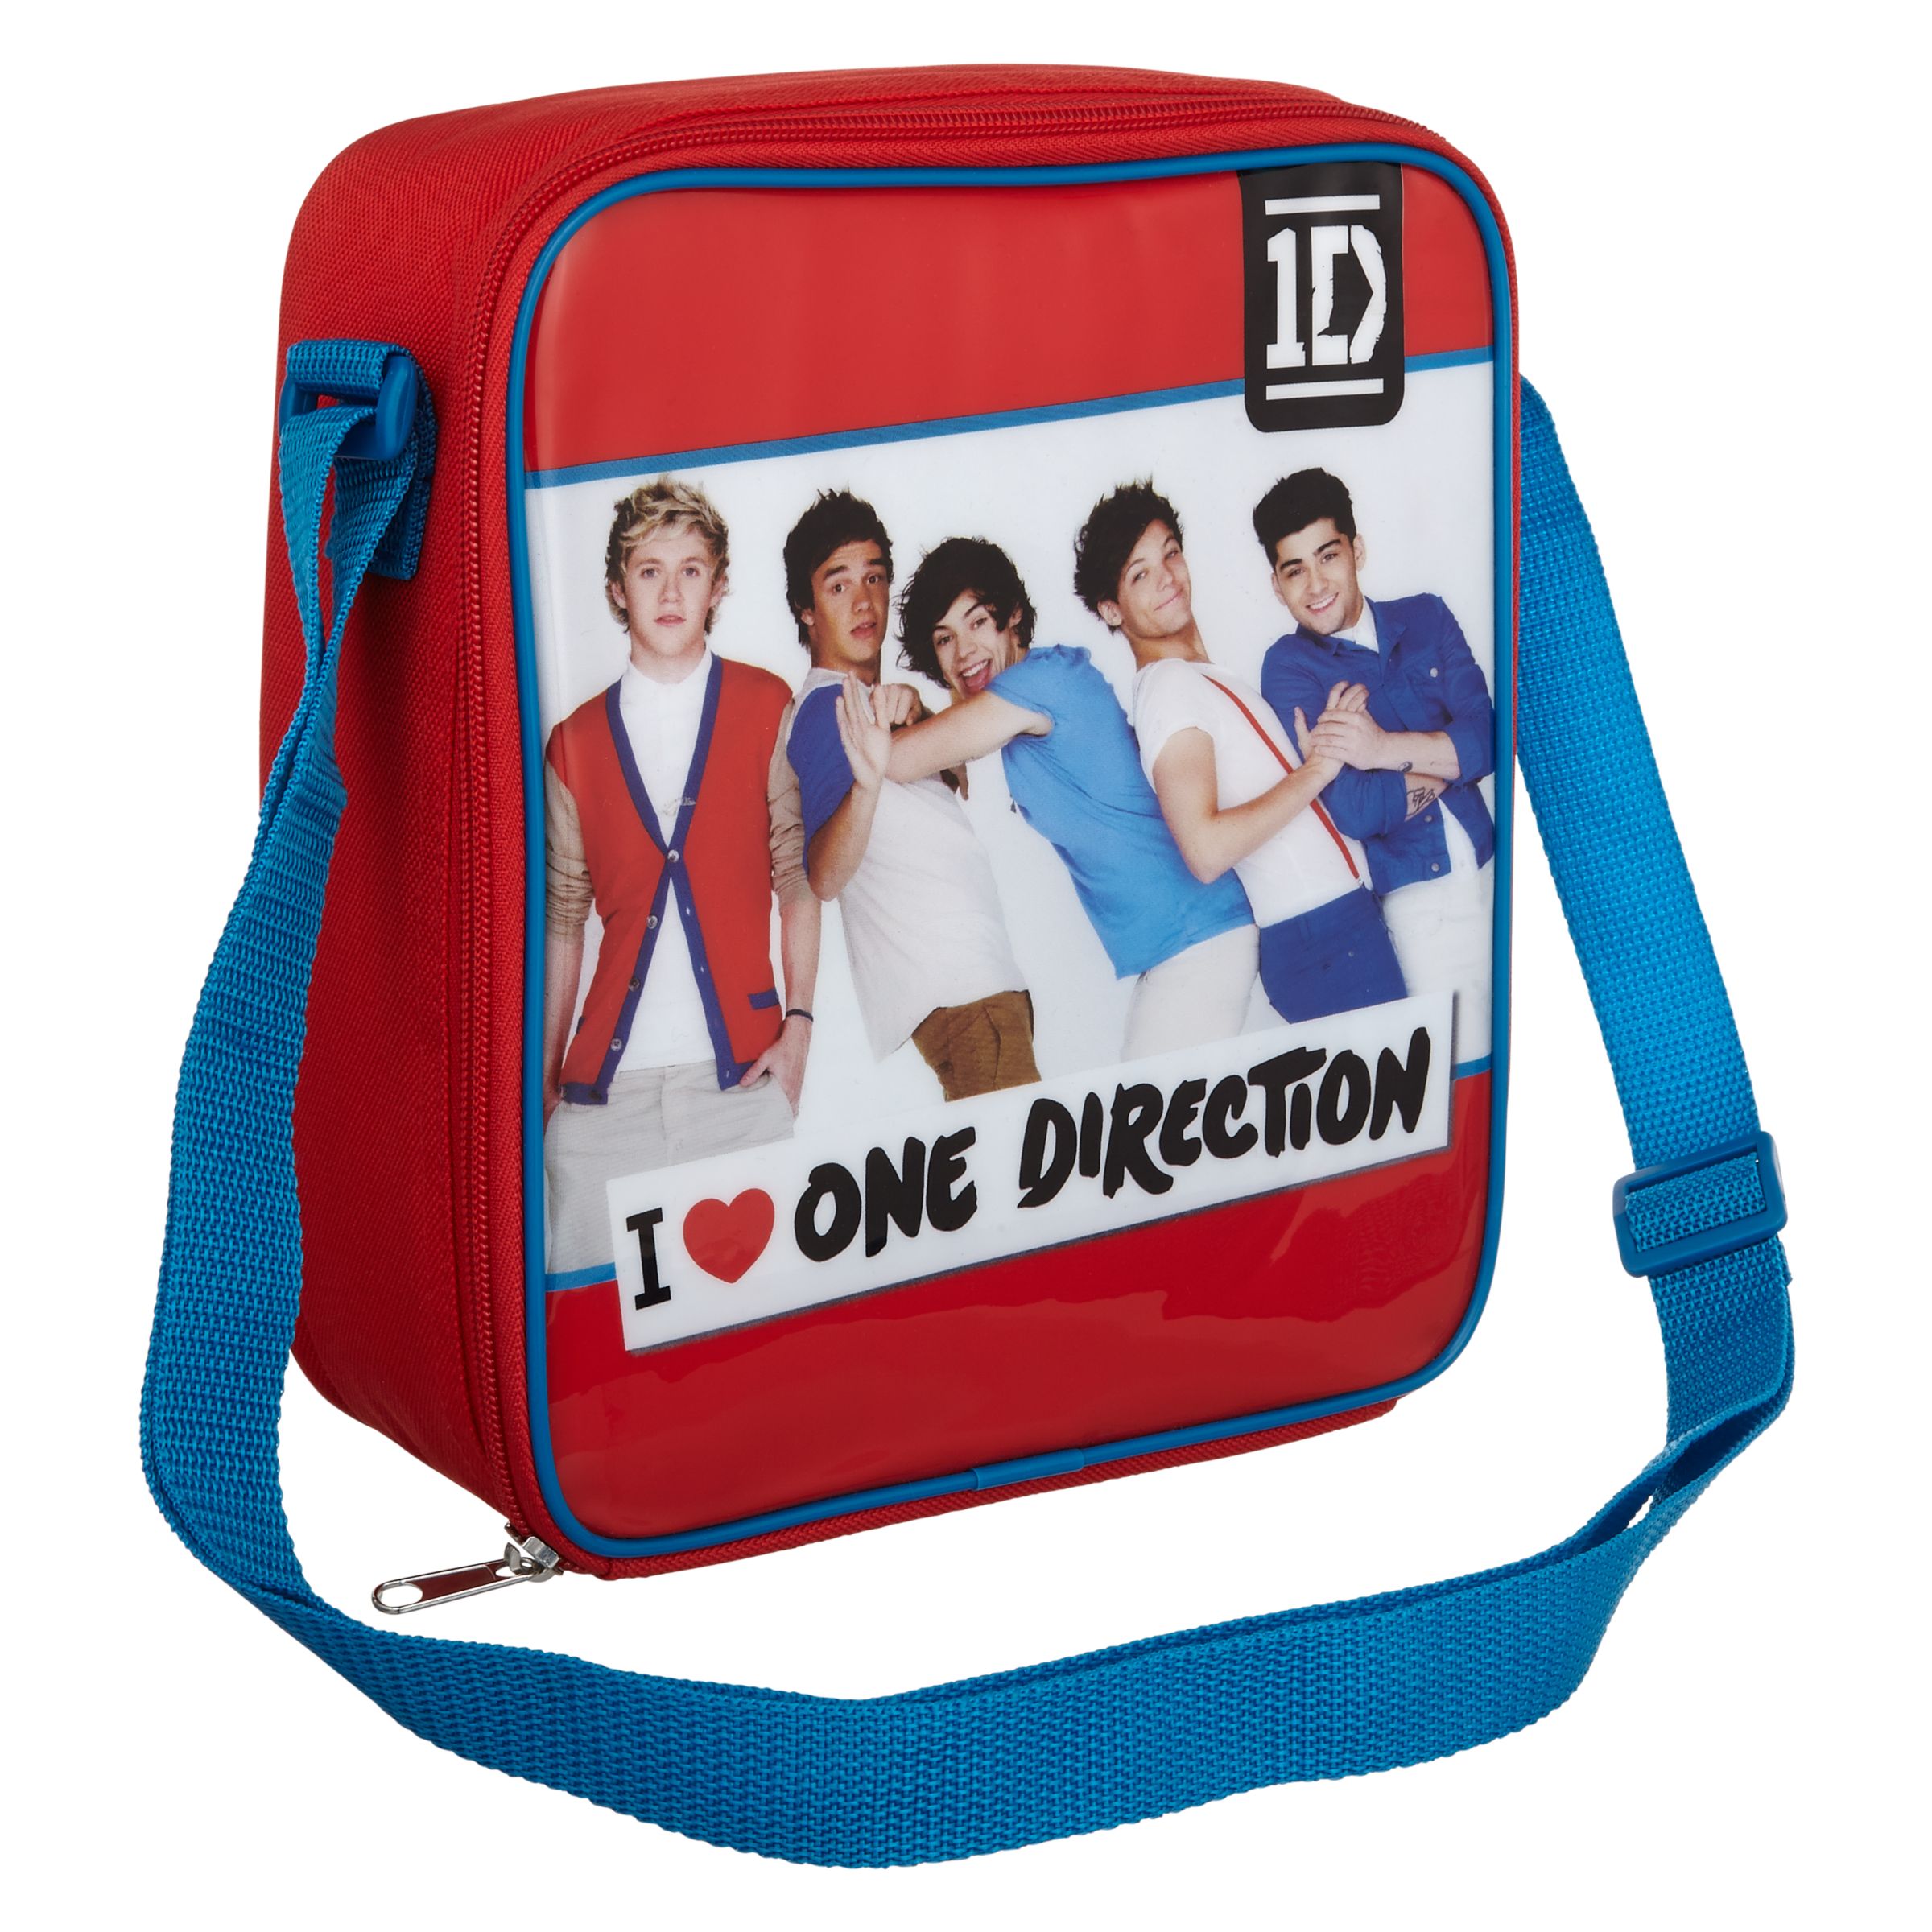 Speakmark One Direction Lunch Bag